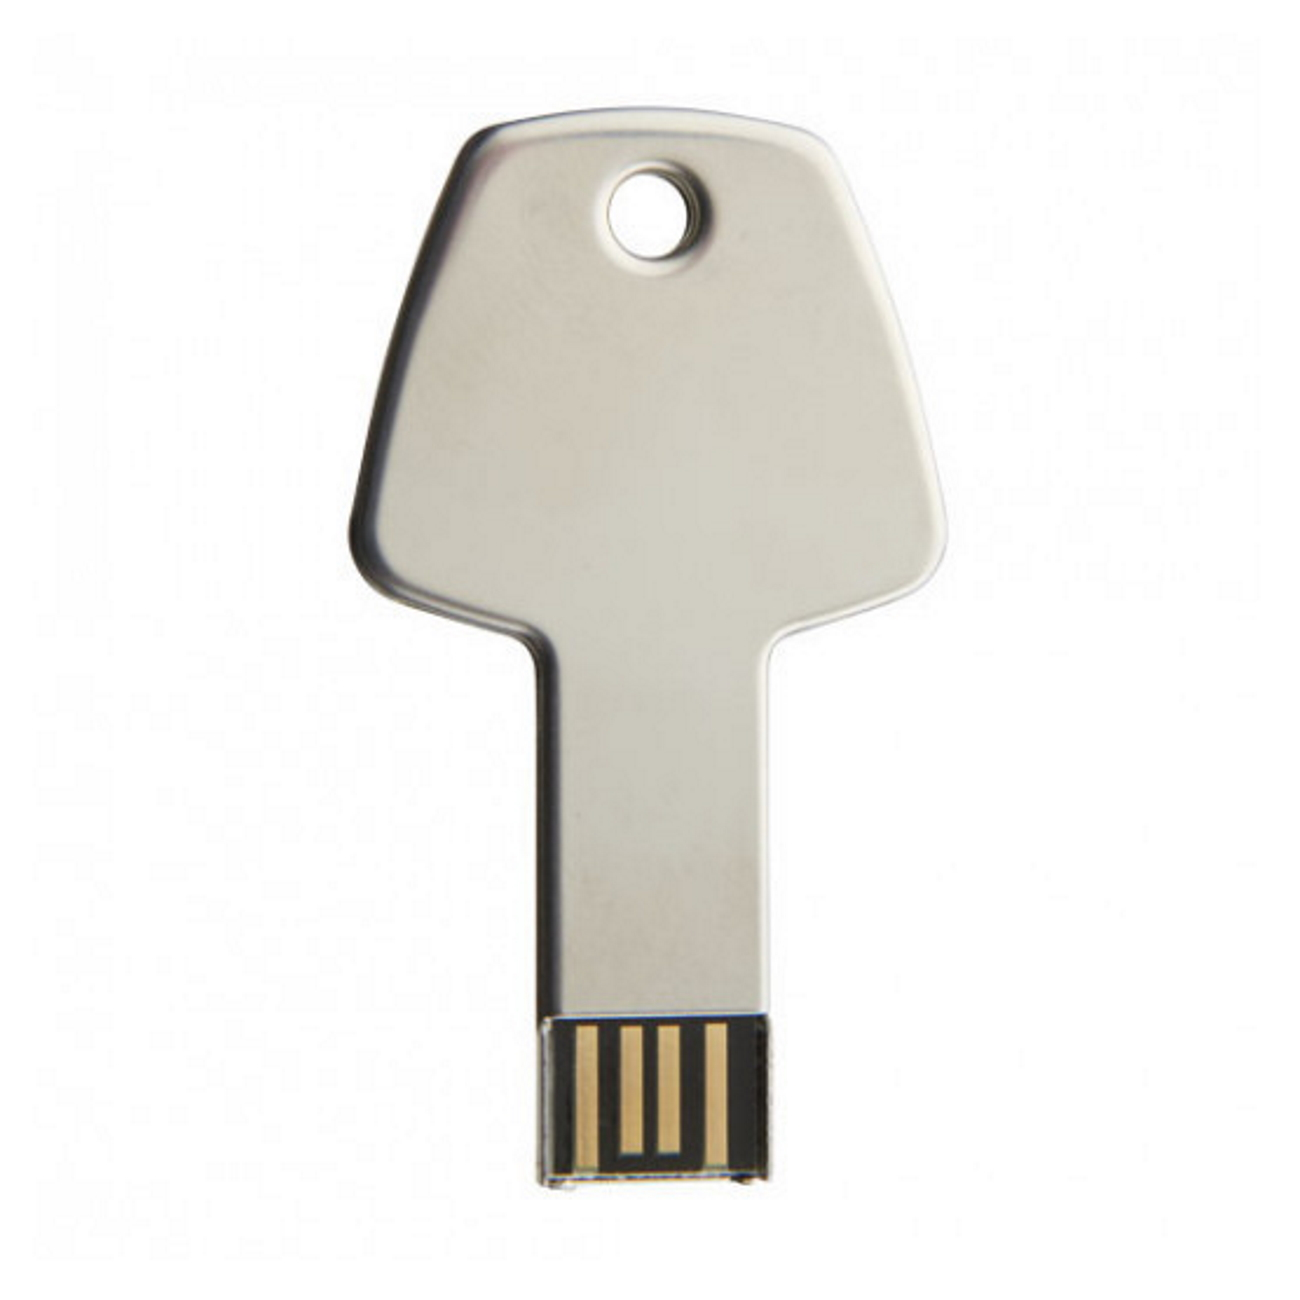 USB GERMANY (Silber, Key USB-Stick 16 GB) ®Schlüssel